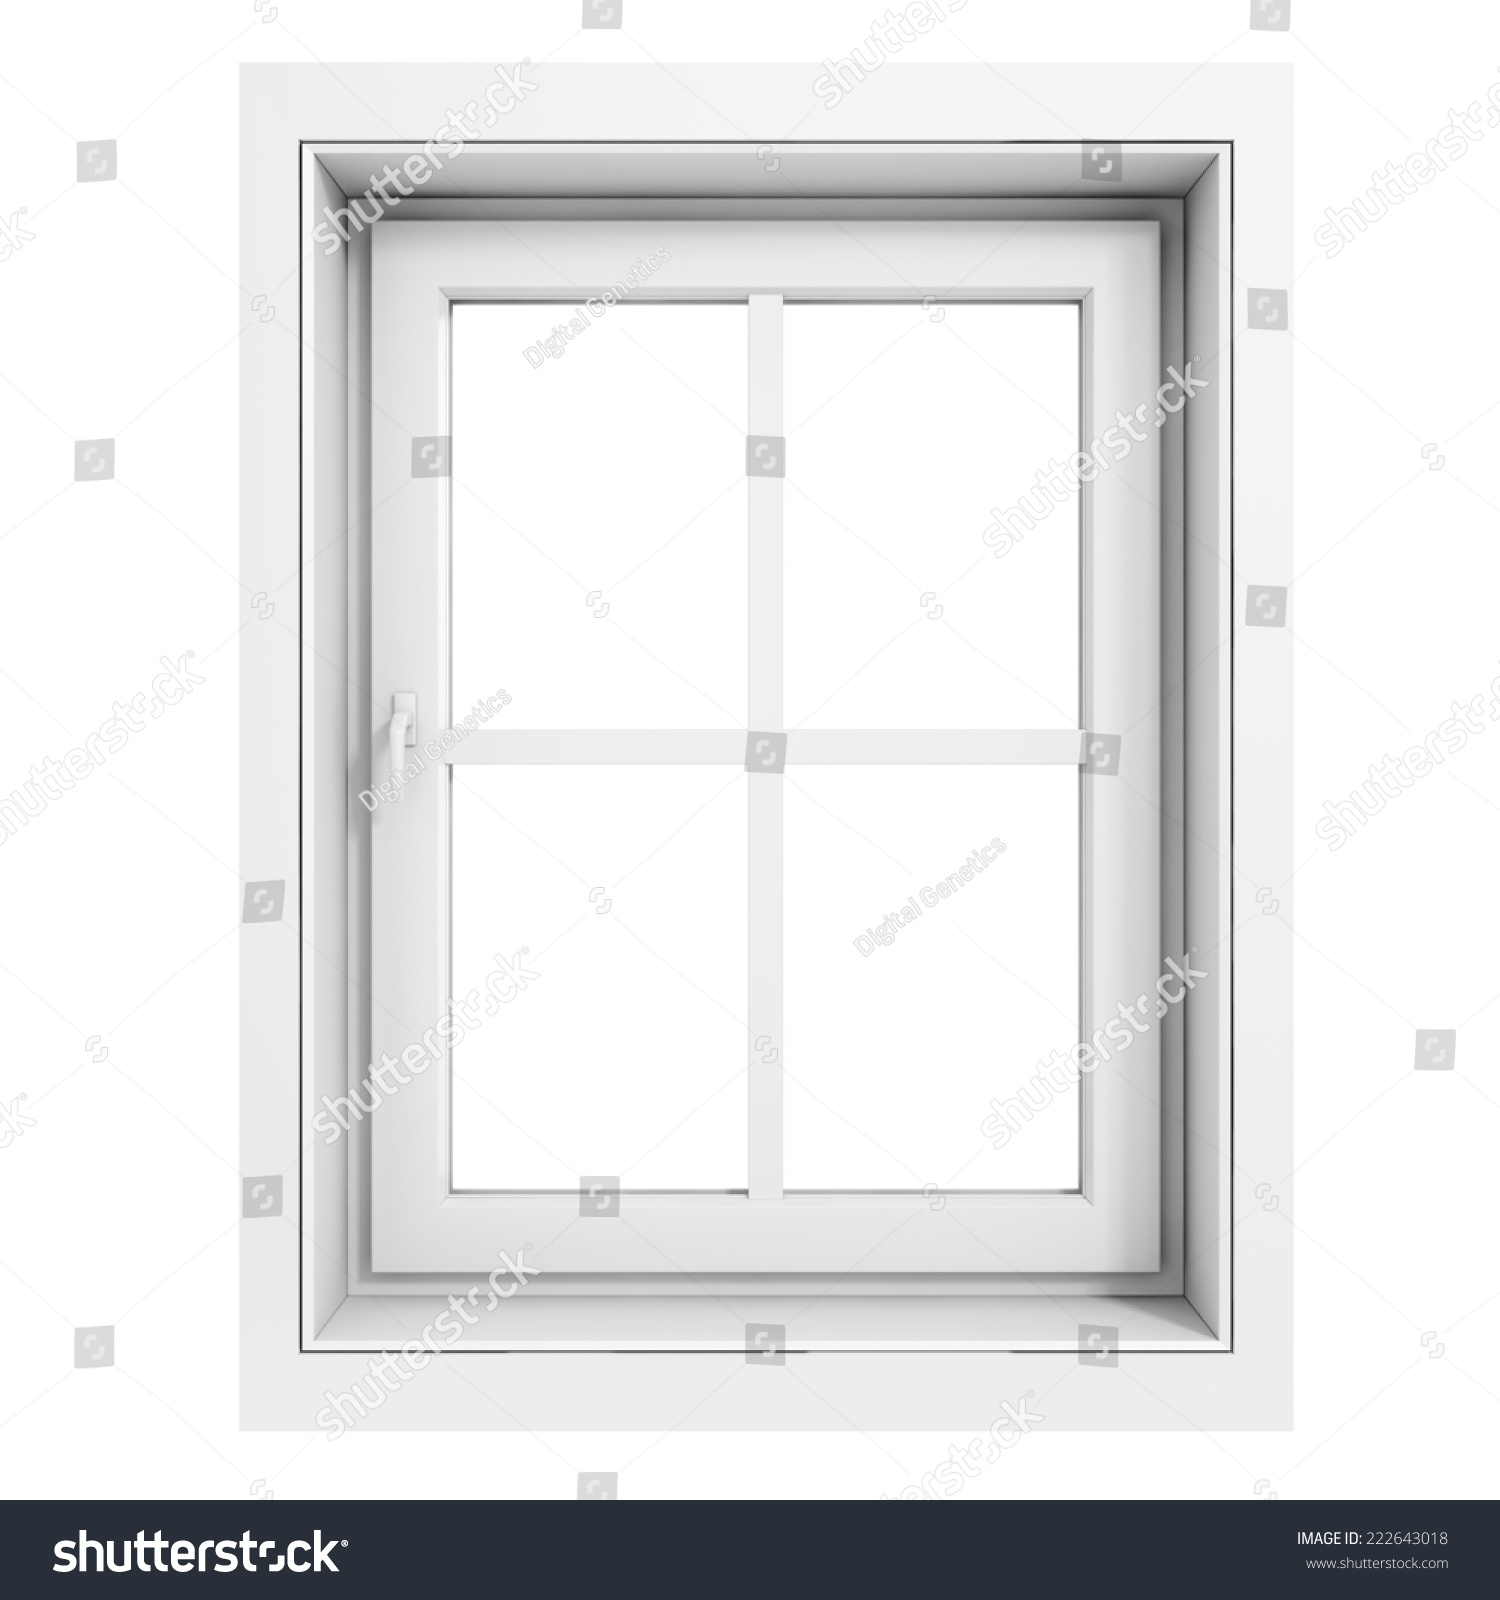 3d Window Frame On White Background Stock Illustration 222643018 ...